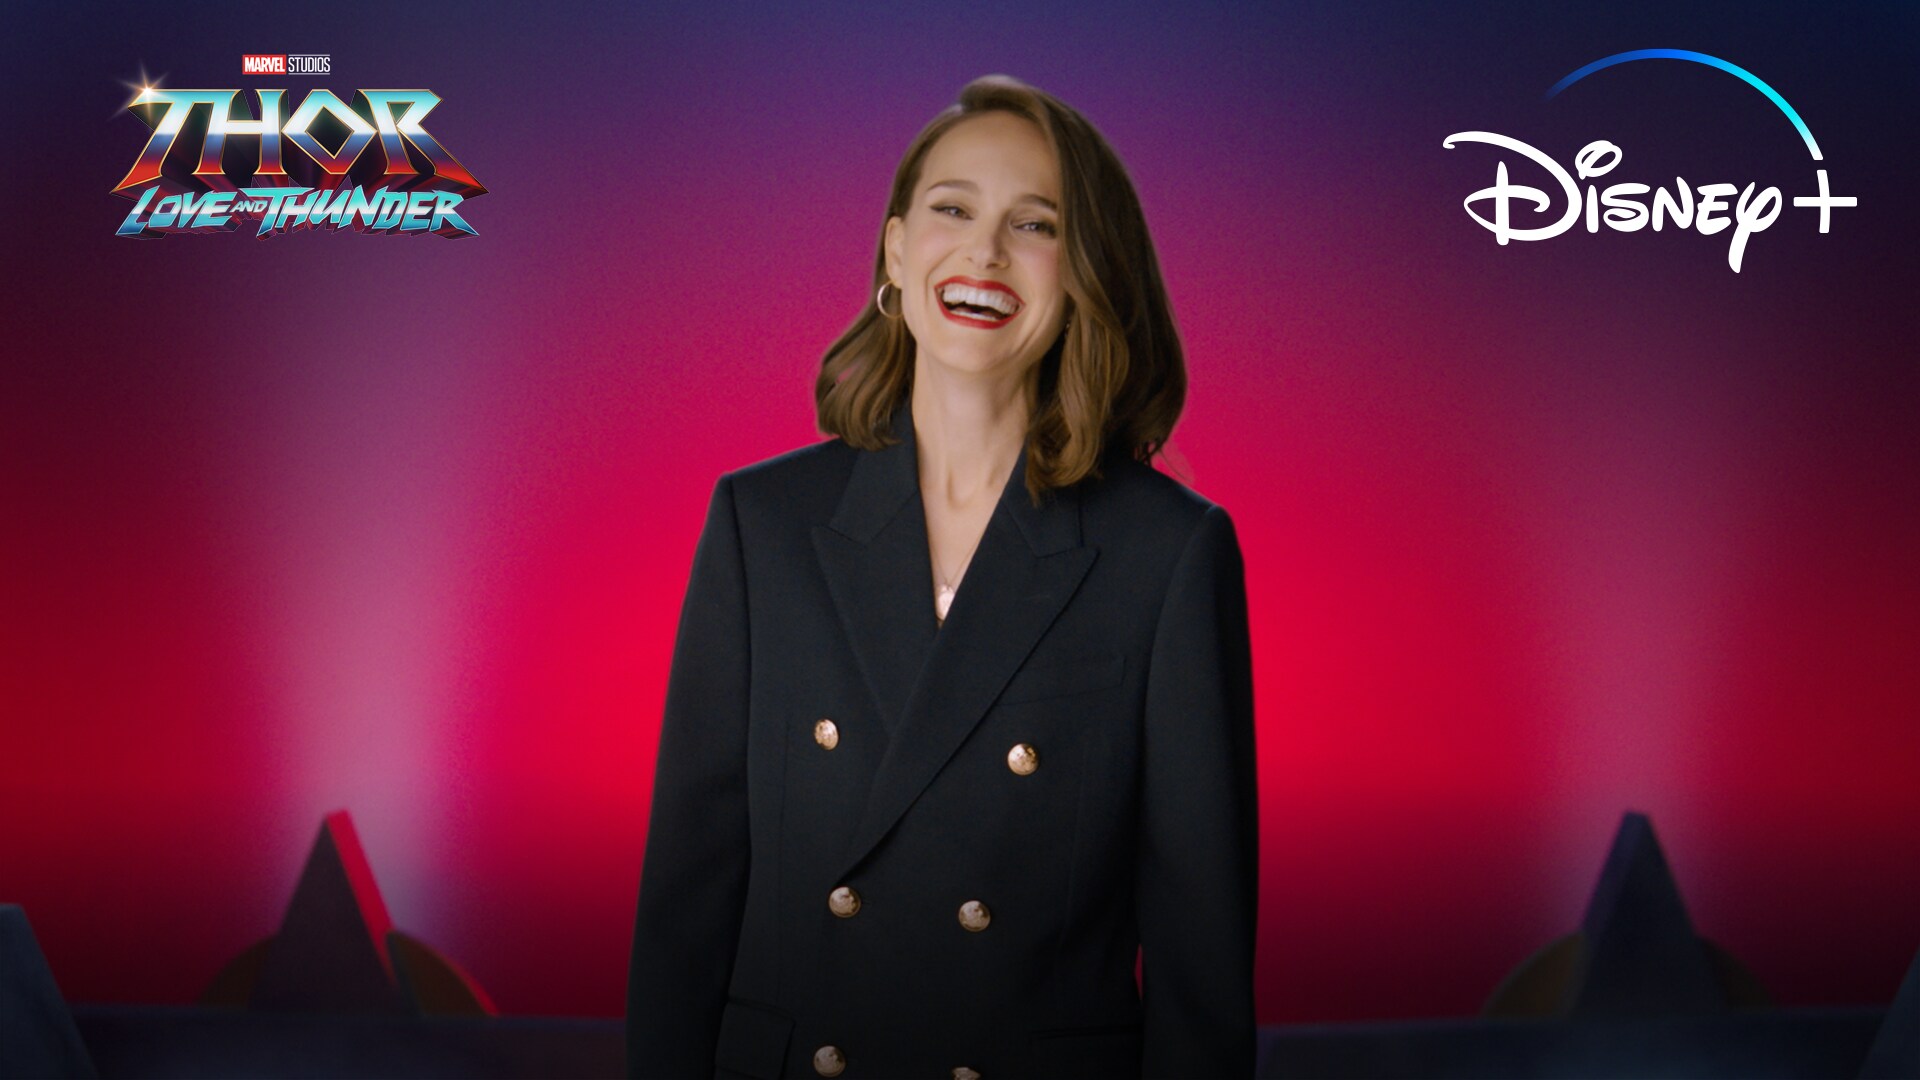 Disney+ Day | Marvel Studios’ Thor: Love and Thunder | Disney+